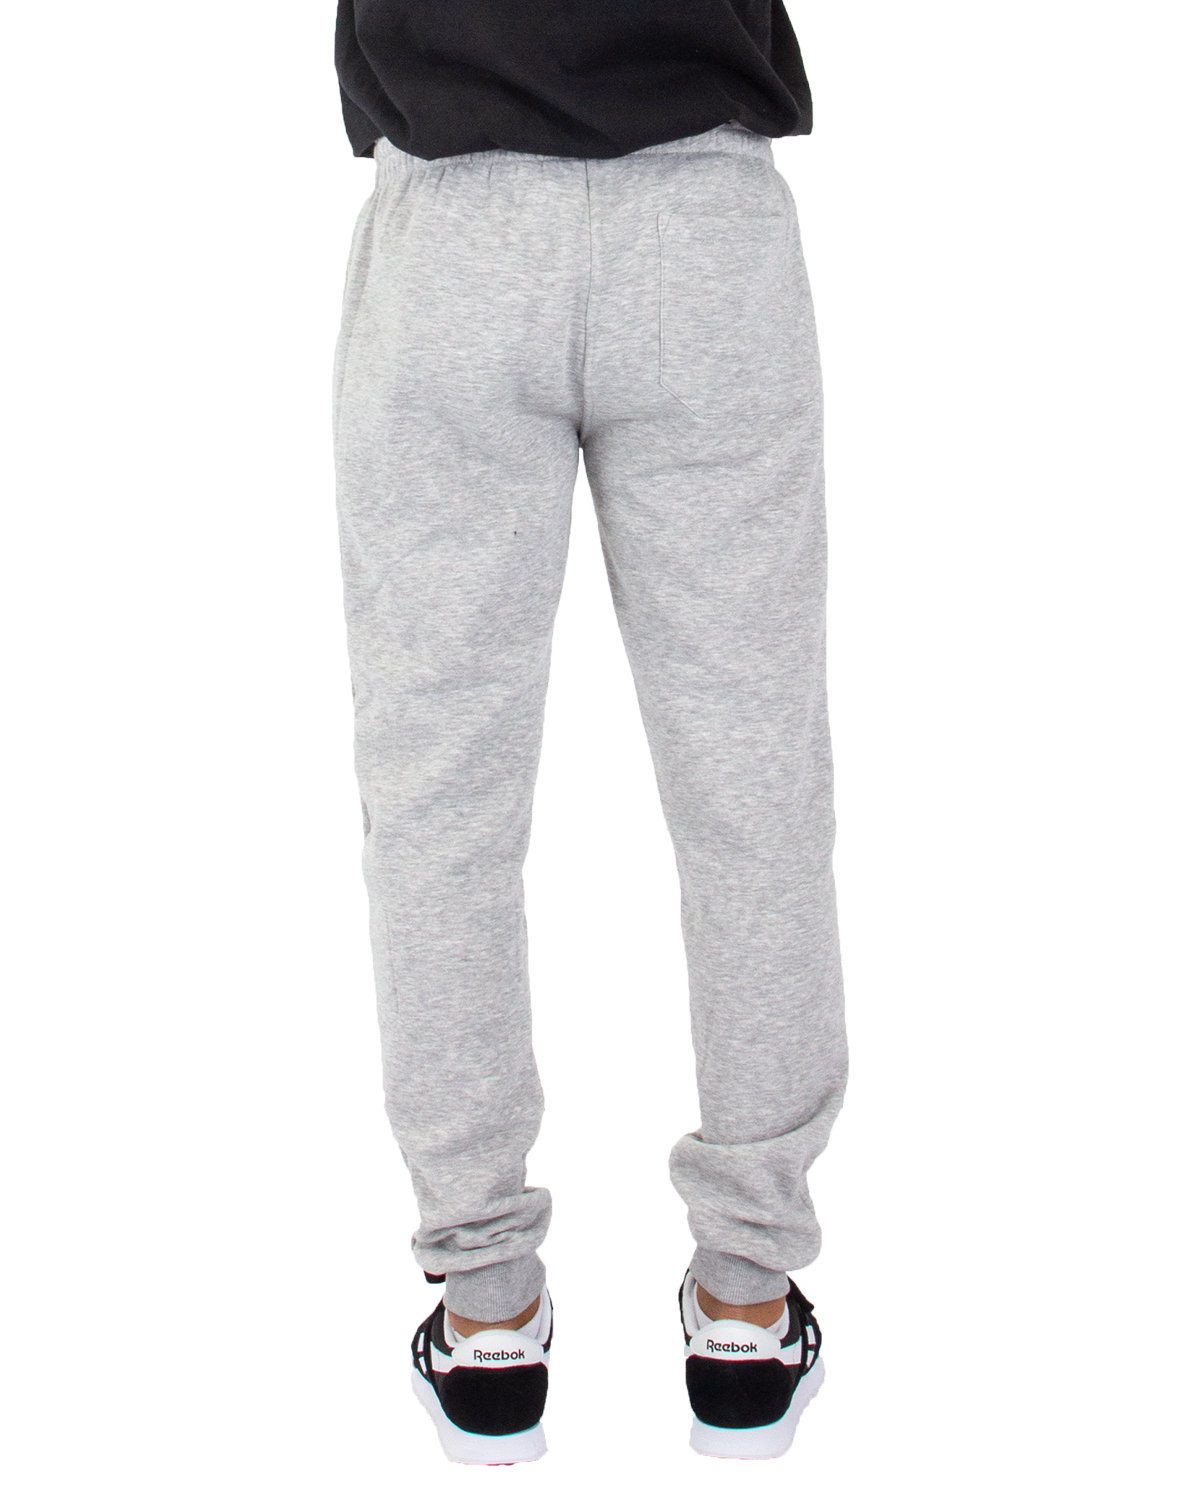 Shaka Wear Men's Fleece Jogger Pants | Generic Site - Priced